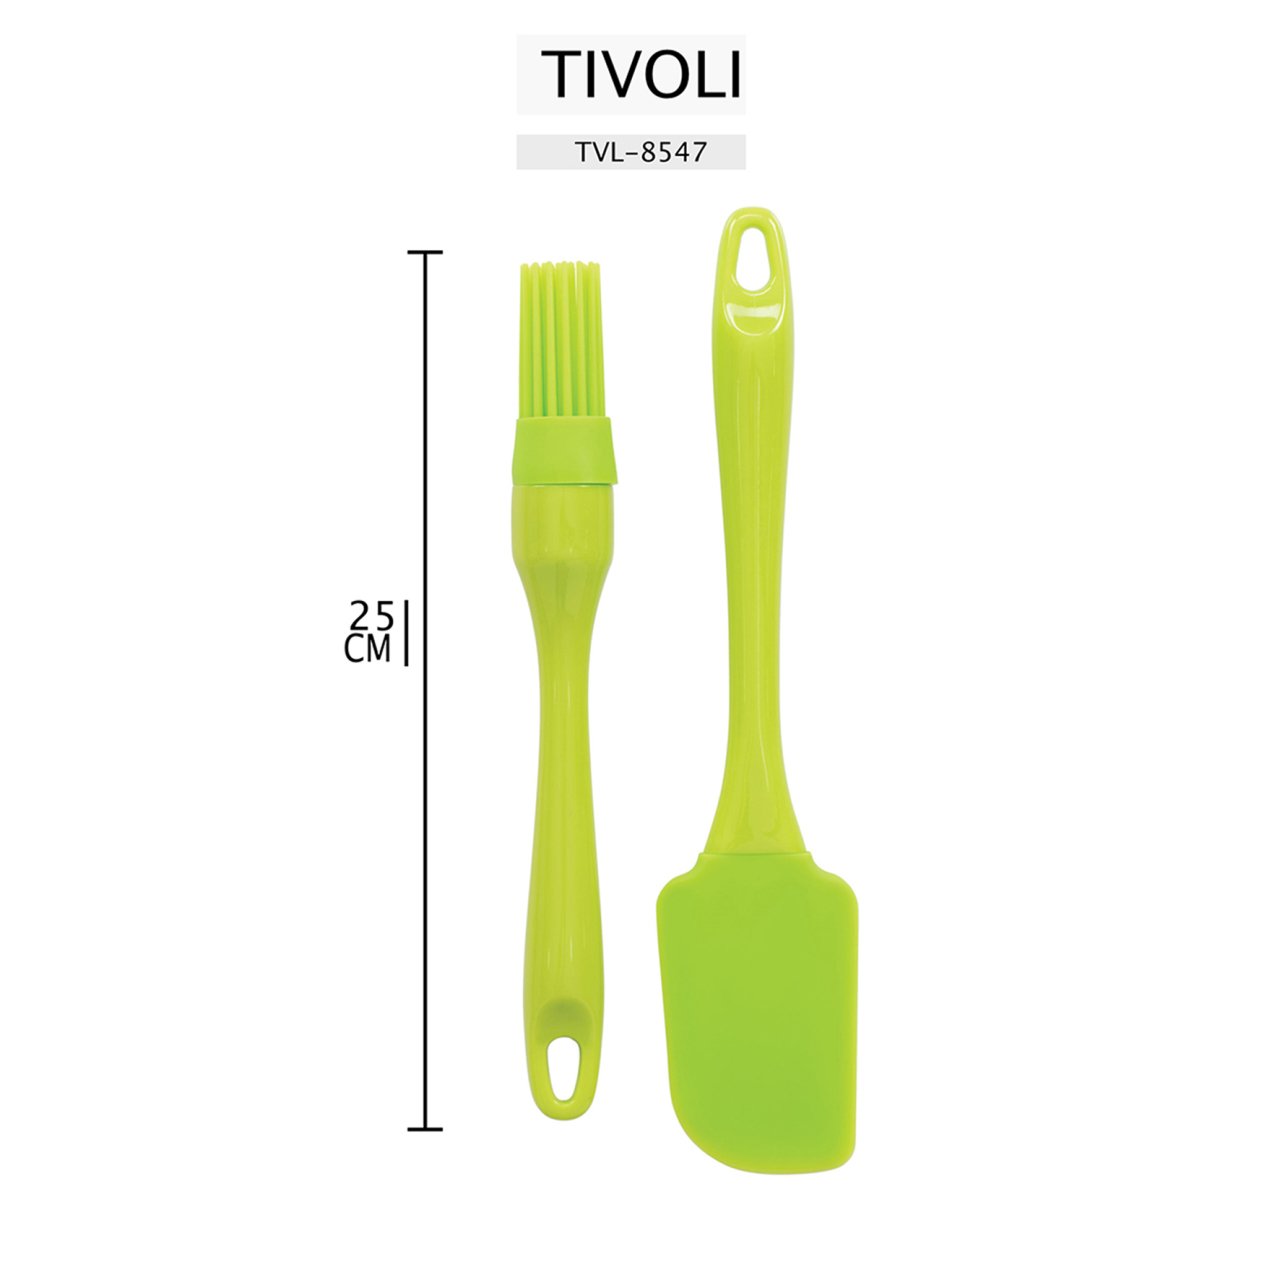 Tivoli Colorato Silikon Spatula Fırça Seti